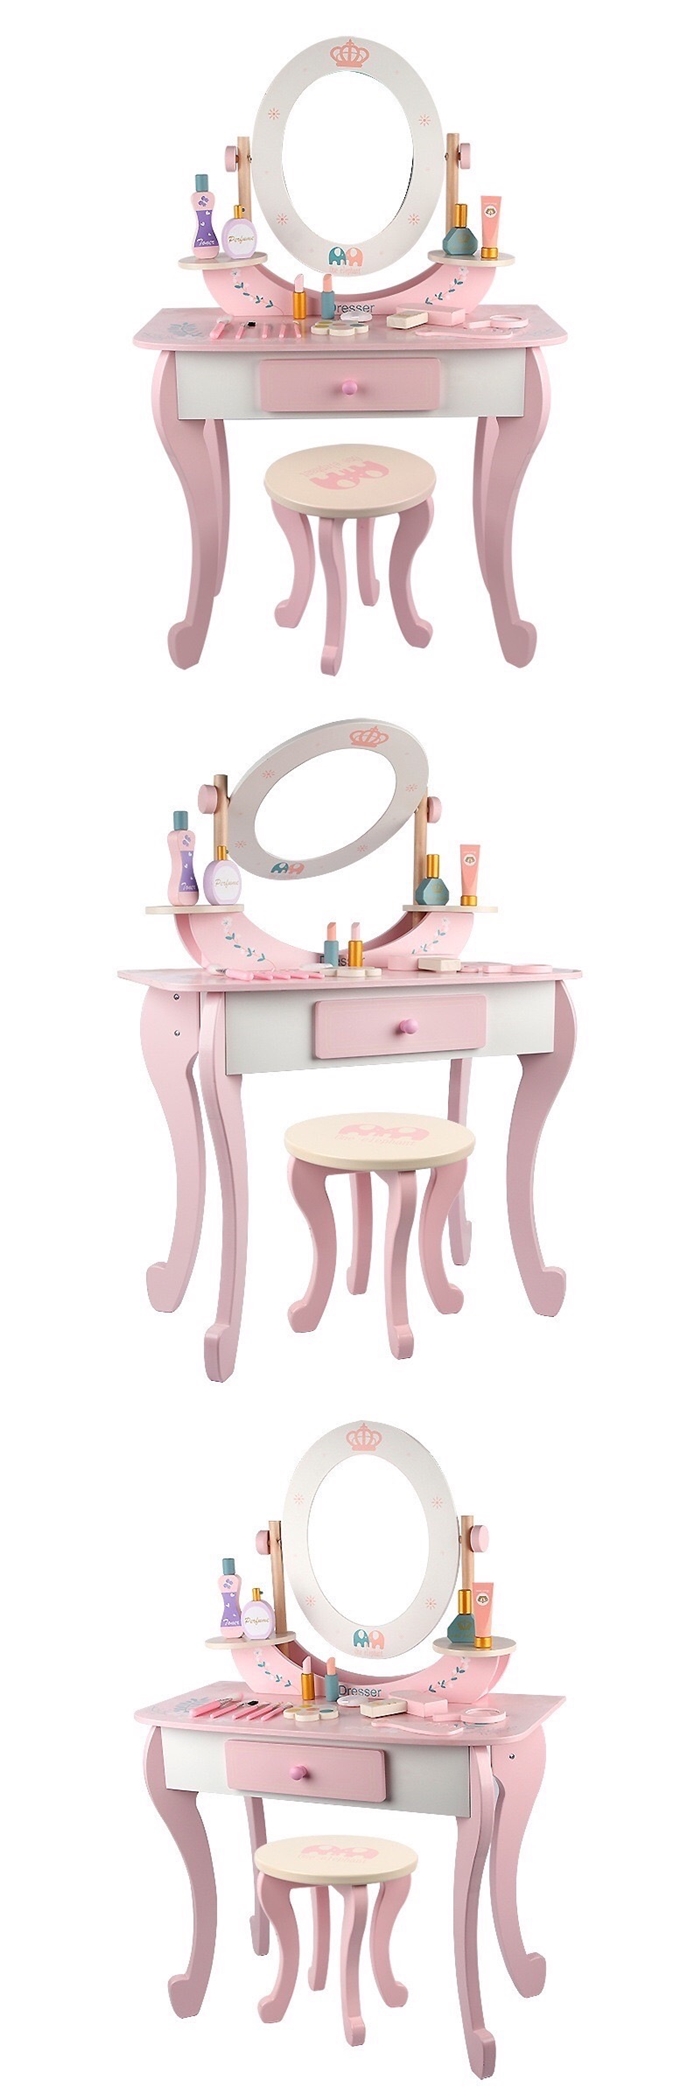 CHING-CHING親親-木製玩具粉紅色梳妝台(MSN21004)